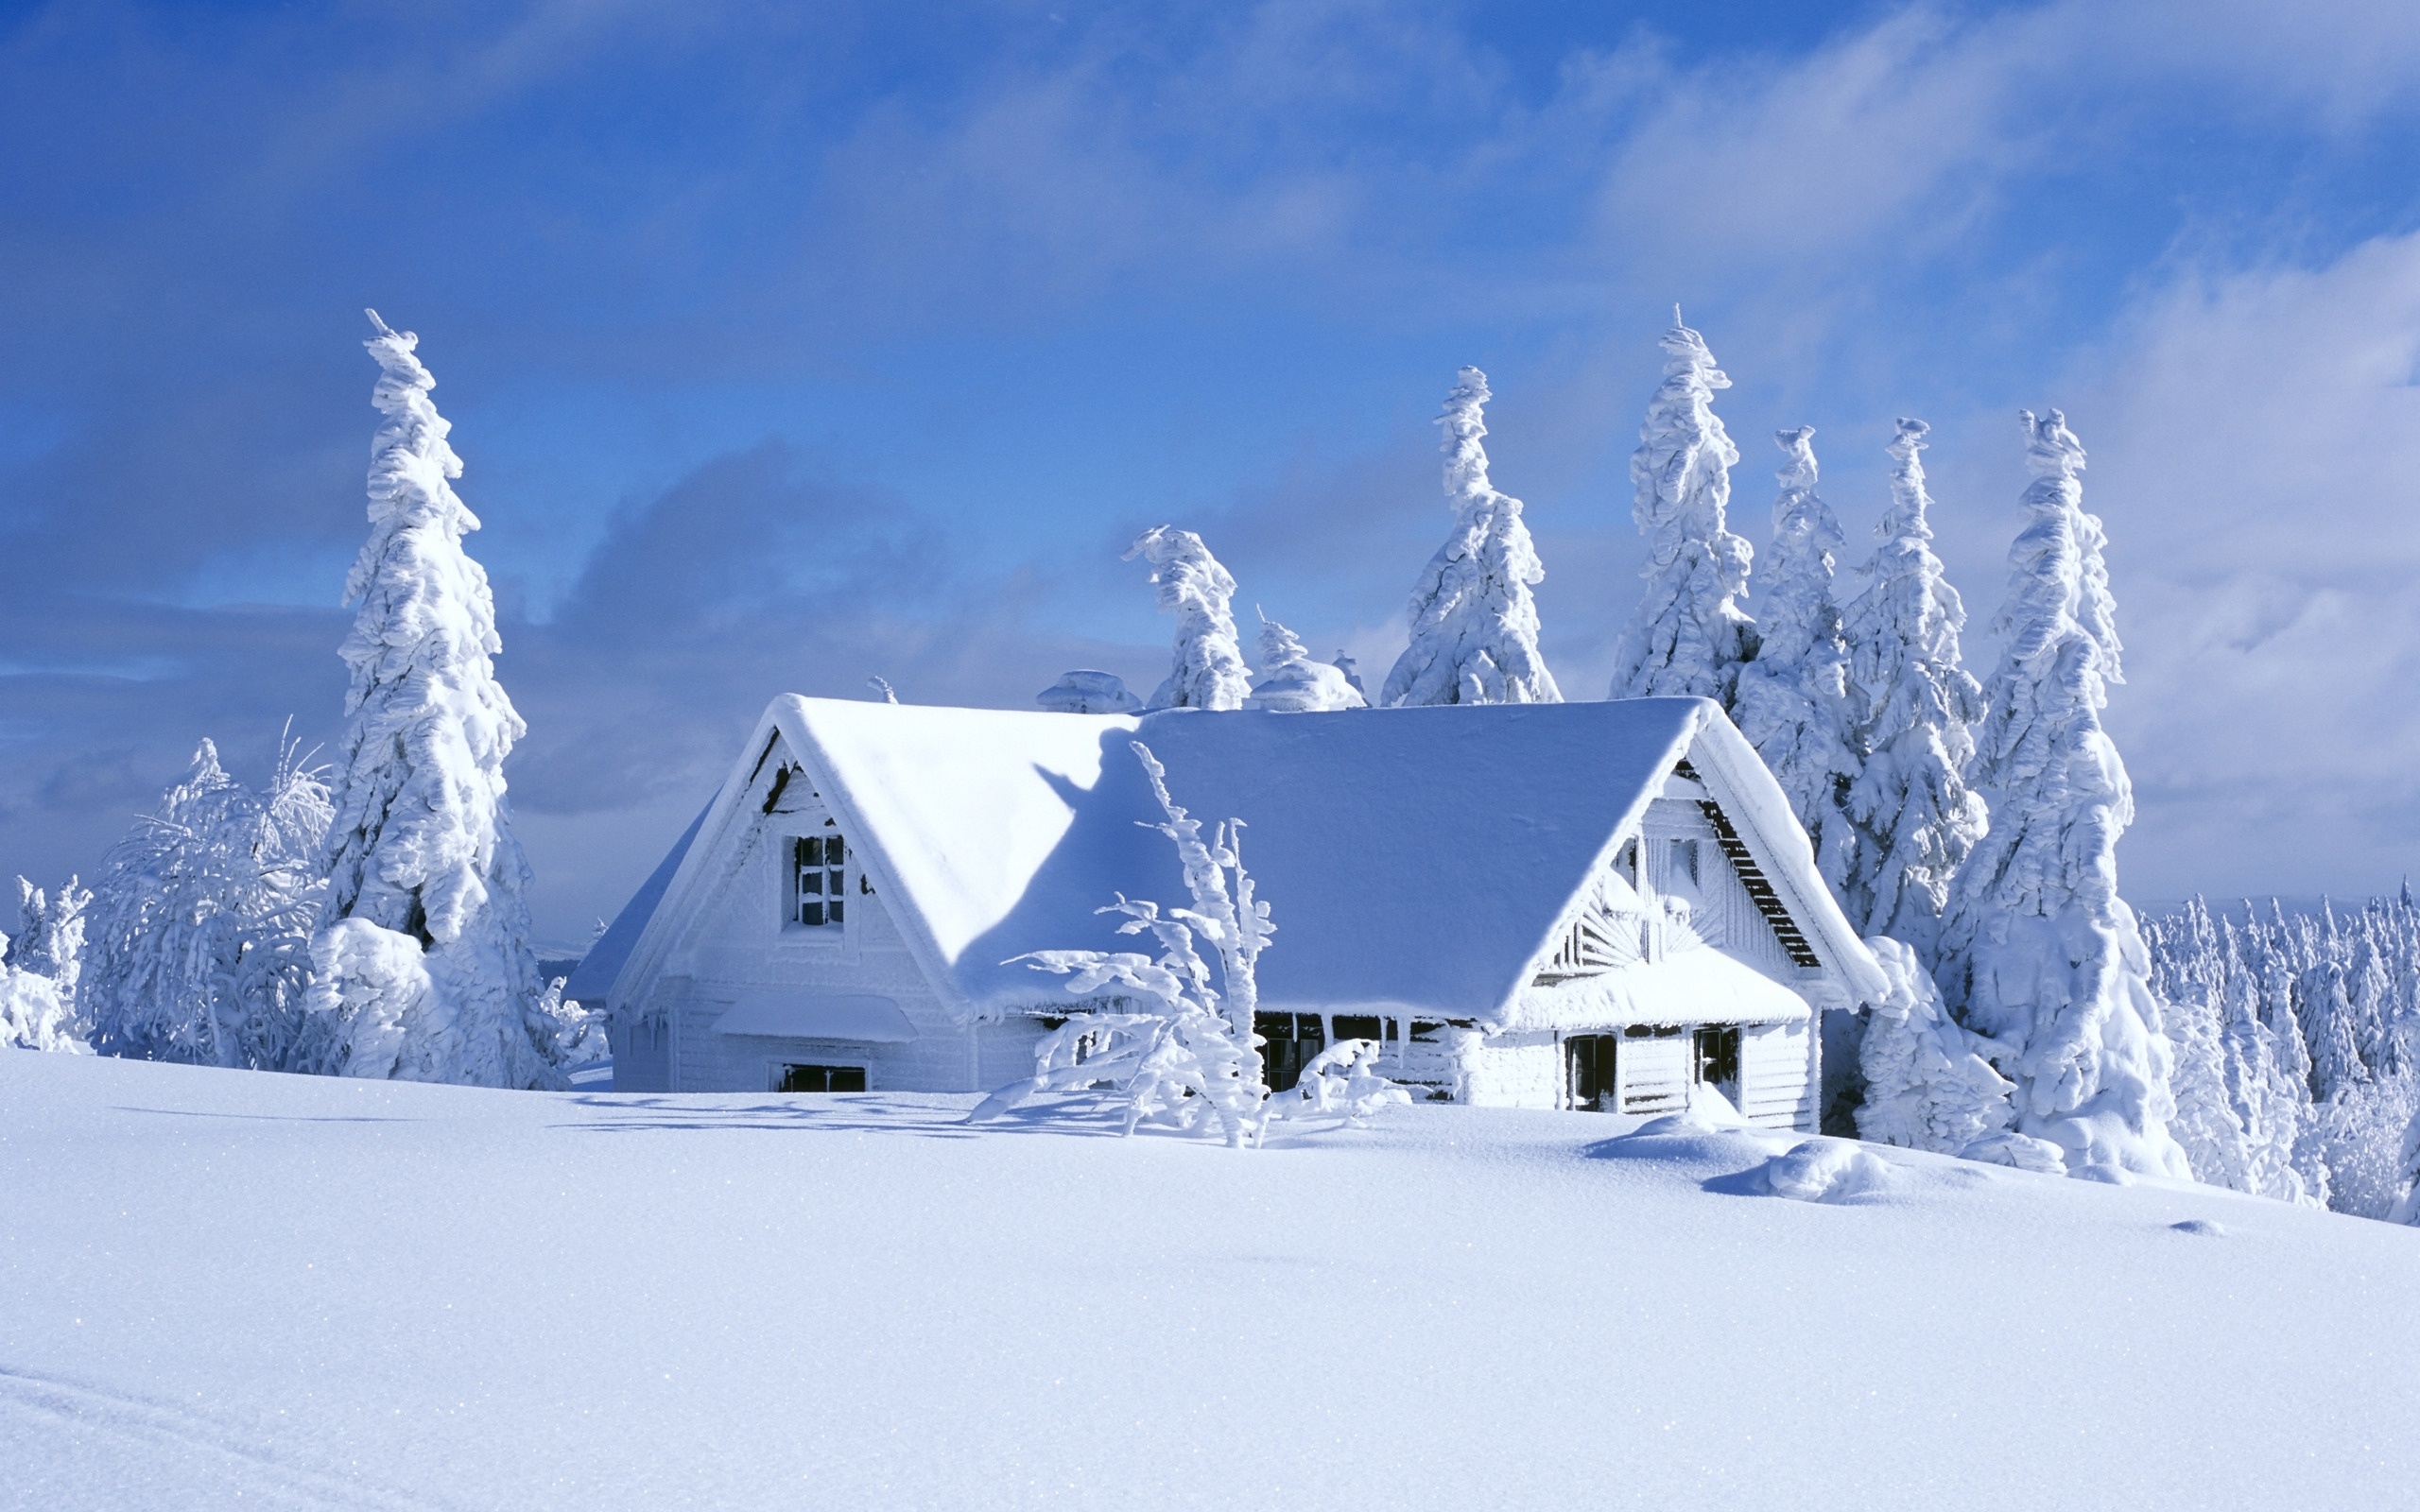 House Covered In Snow desktop wallpaper